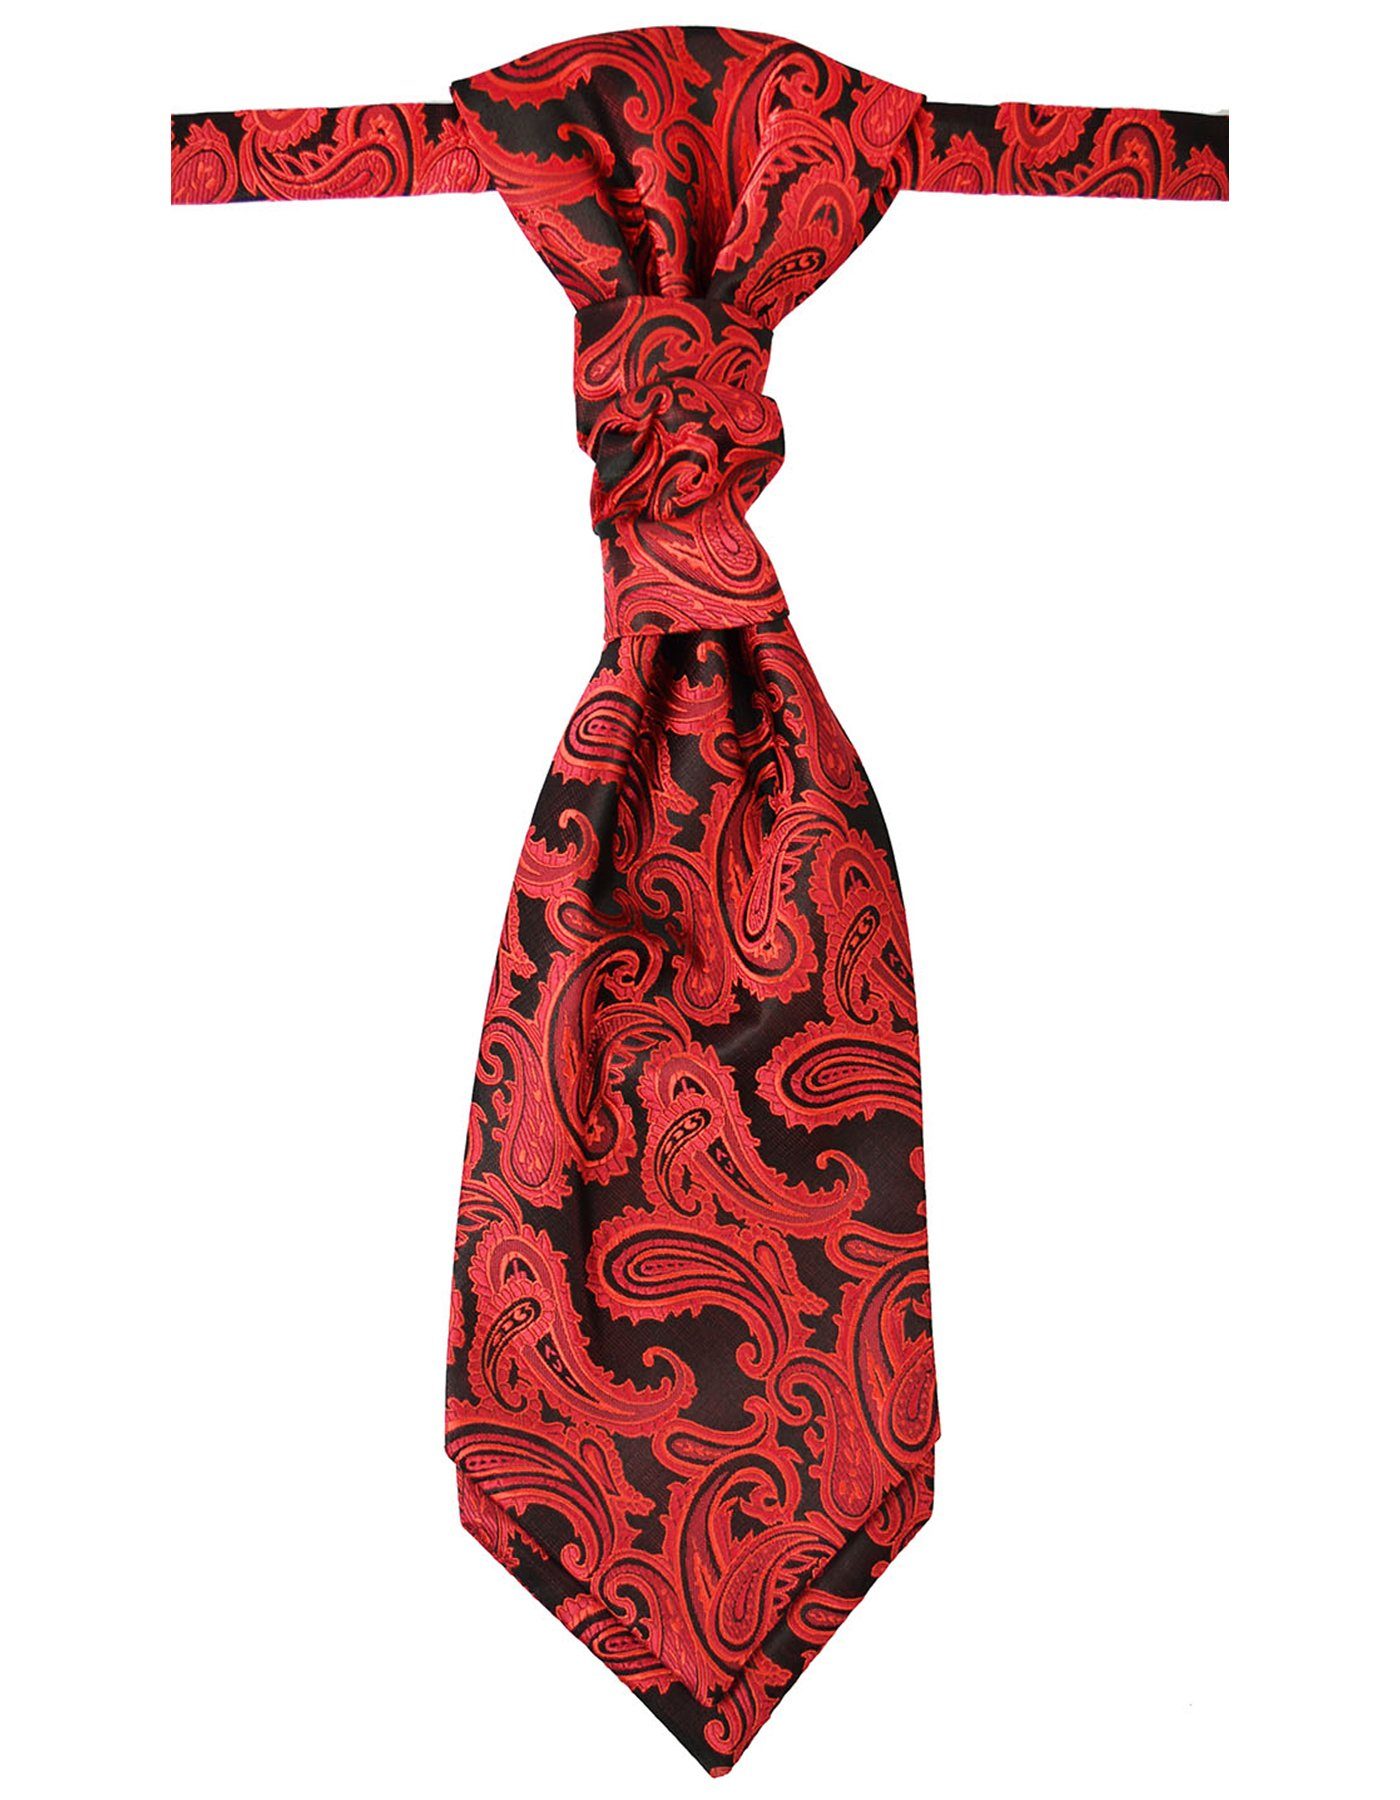 Paul Malone Krawatte Plastron paisley Hochzeitskrawatte - vorgebunden rot v99